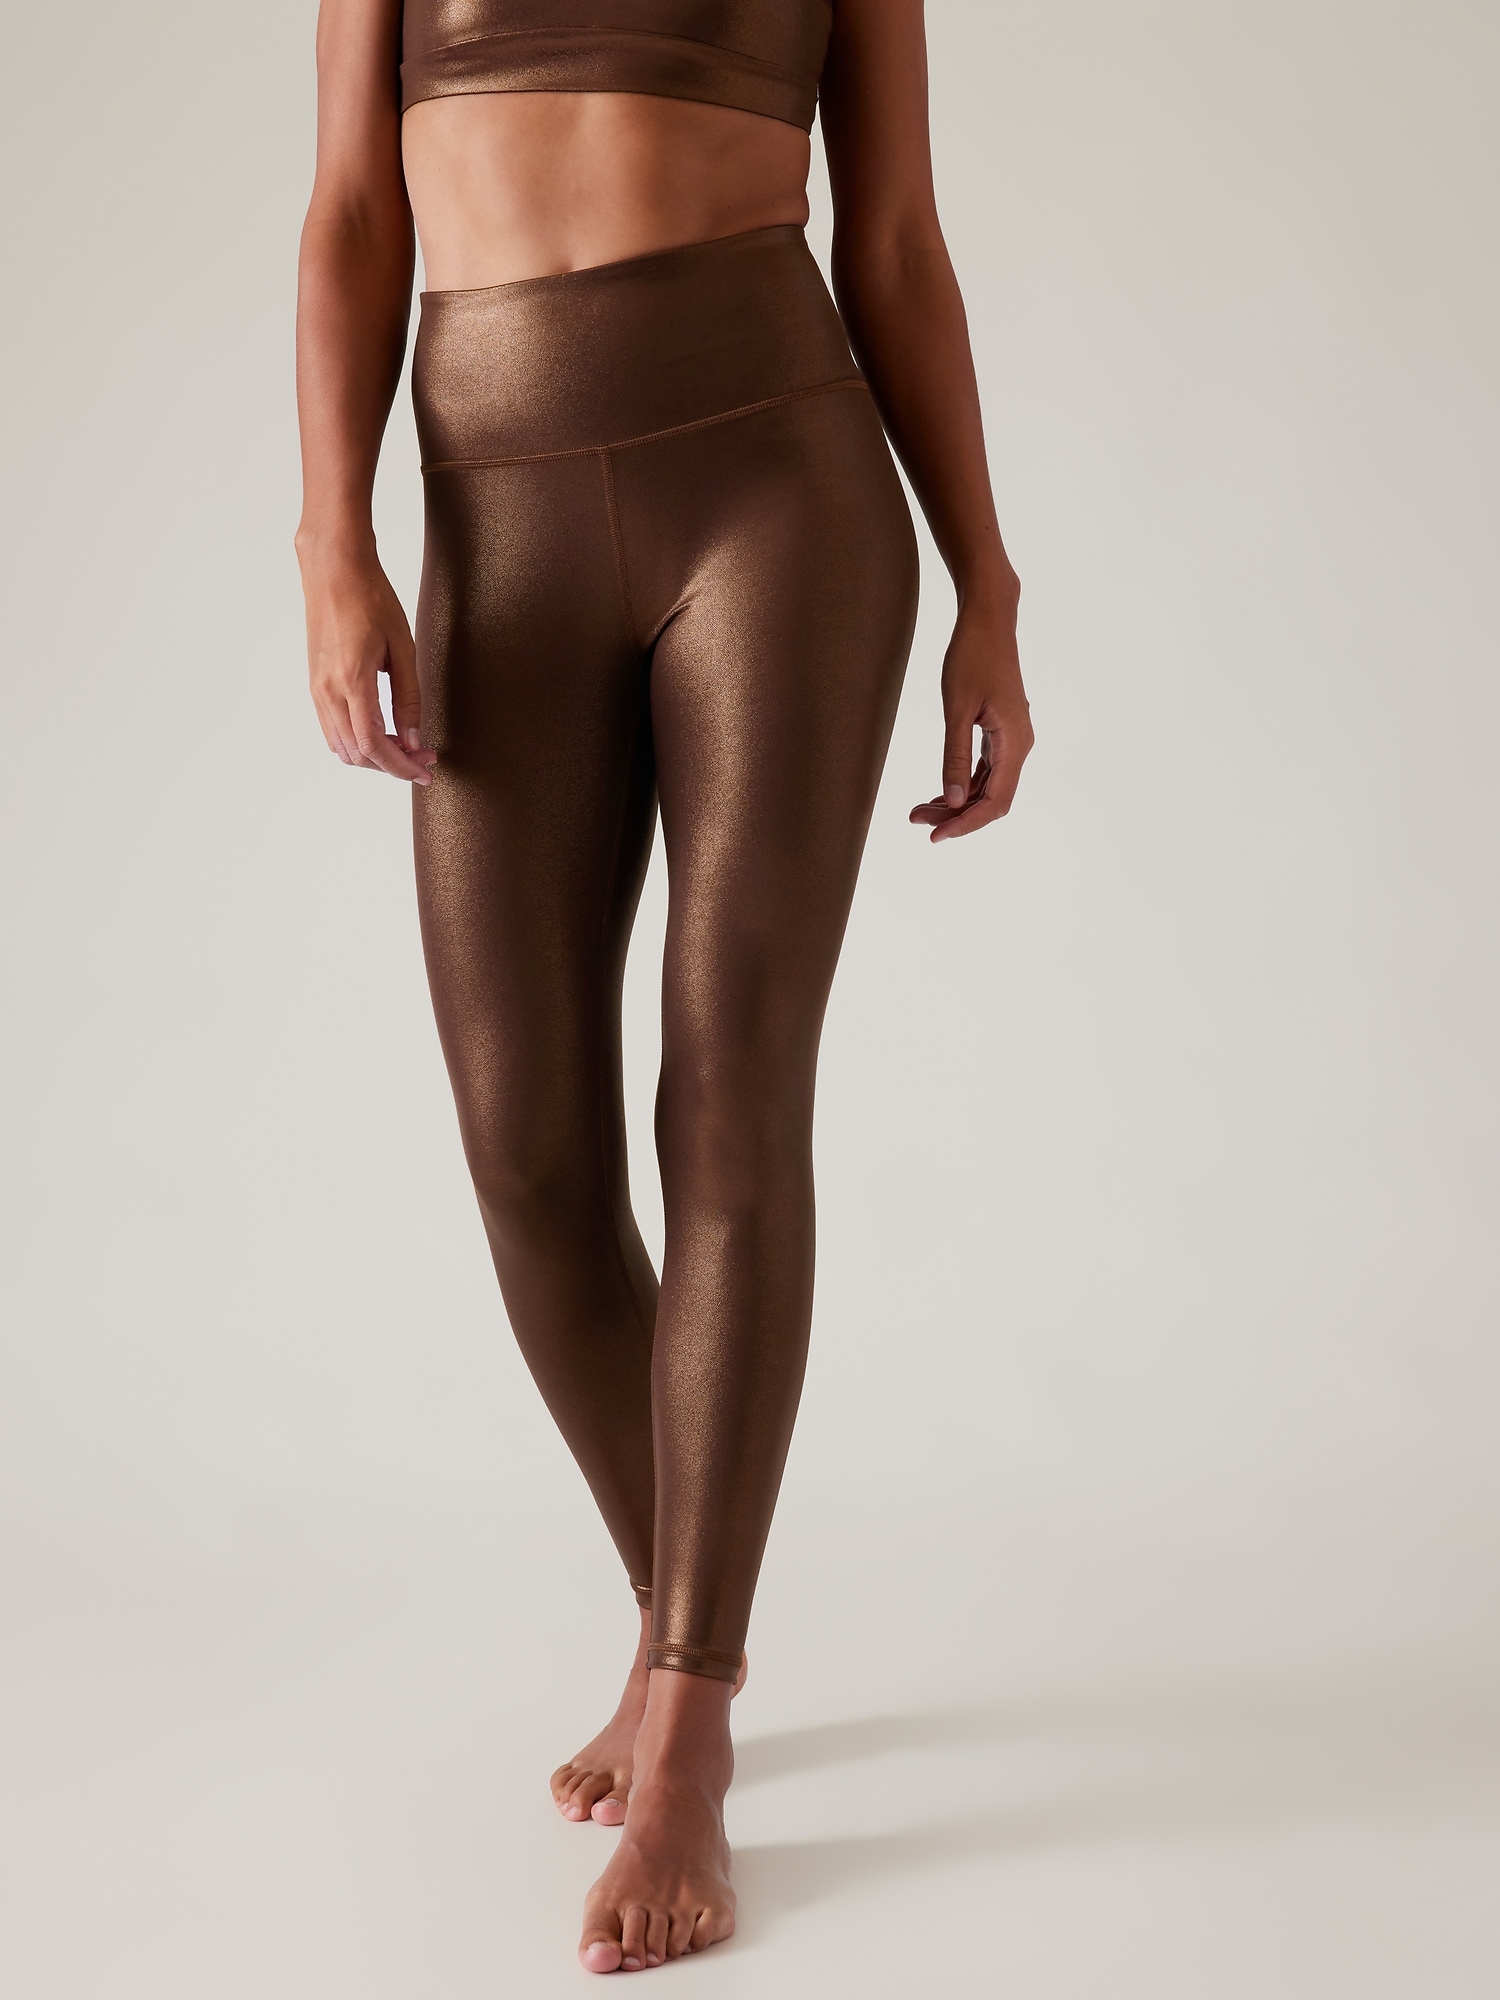 Athleta Delancey Shine Tight Faux Leather Black Shiny Leggings Women's Large  - $41 - From Sara